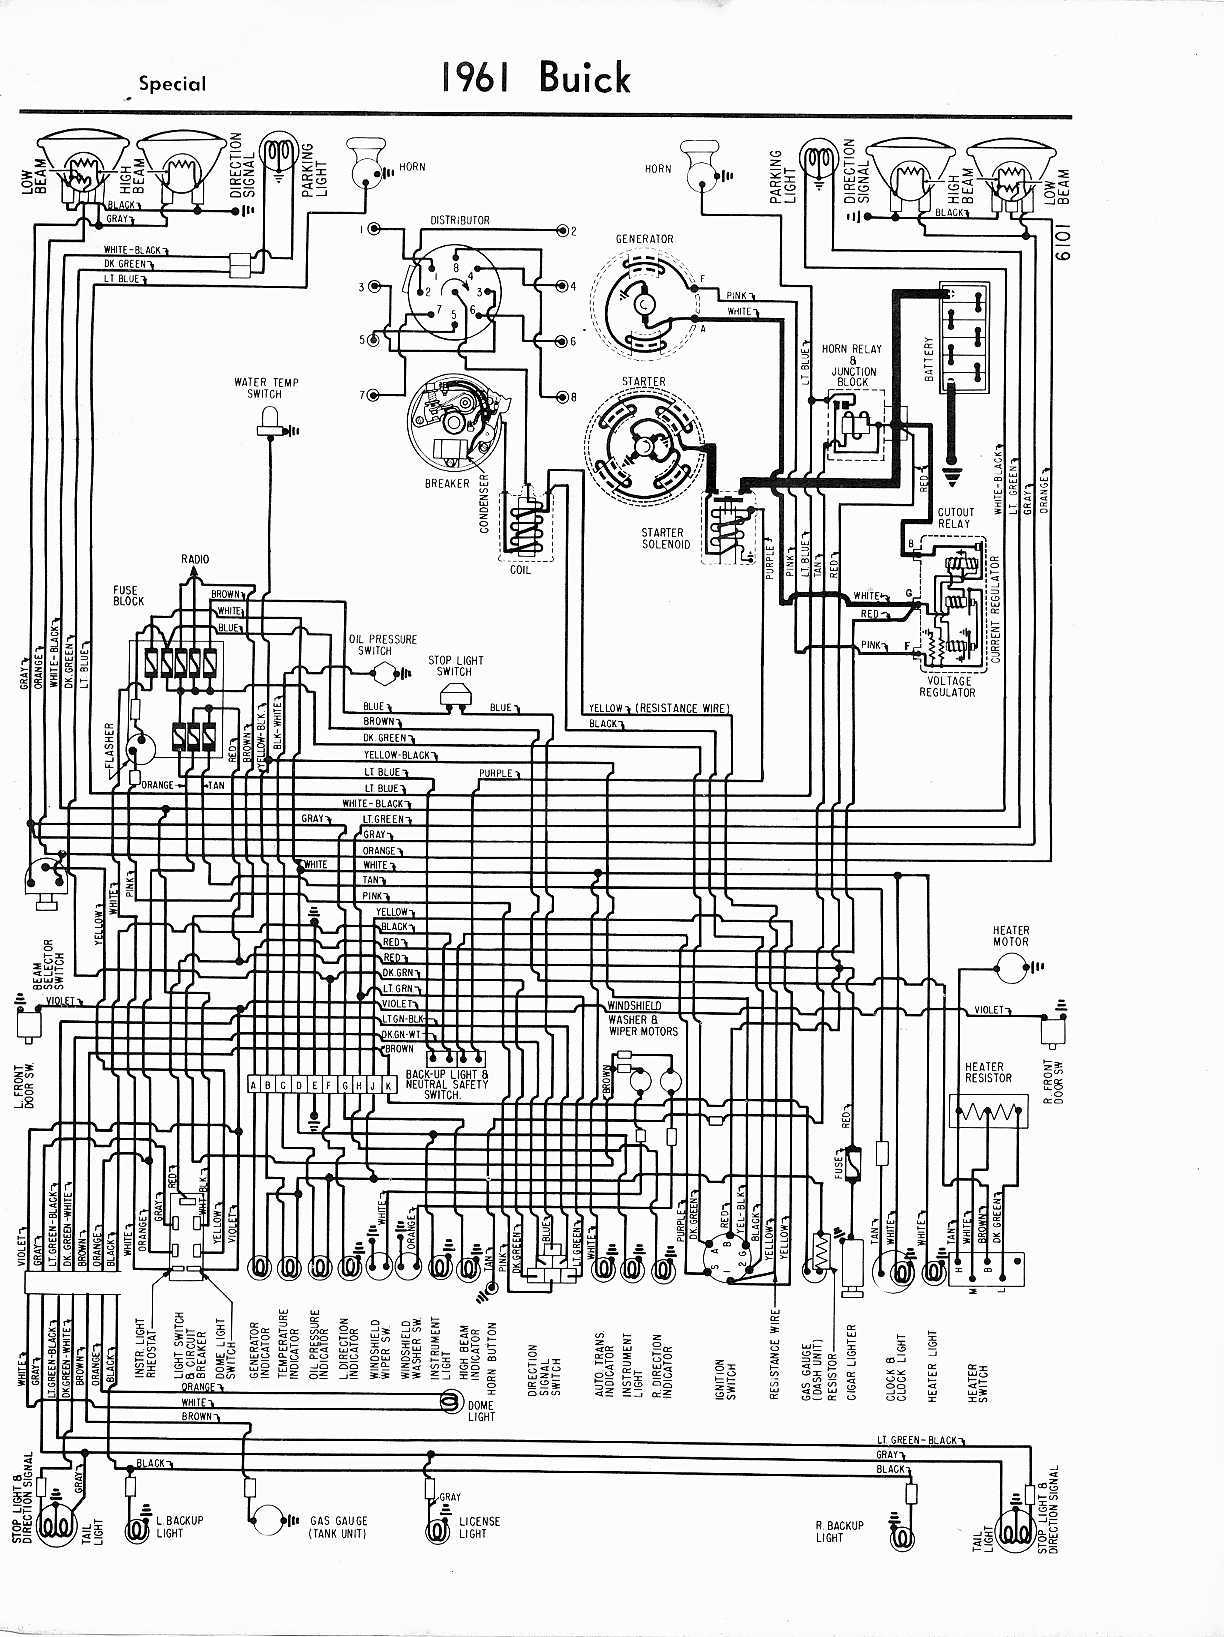 [DIAGRAM] 65 Riviera Wiring Diagram Schematic FULL Version HD Quality